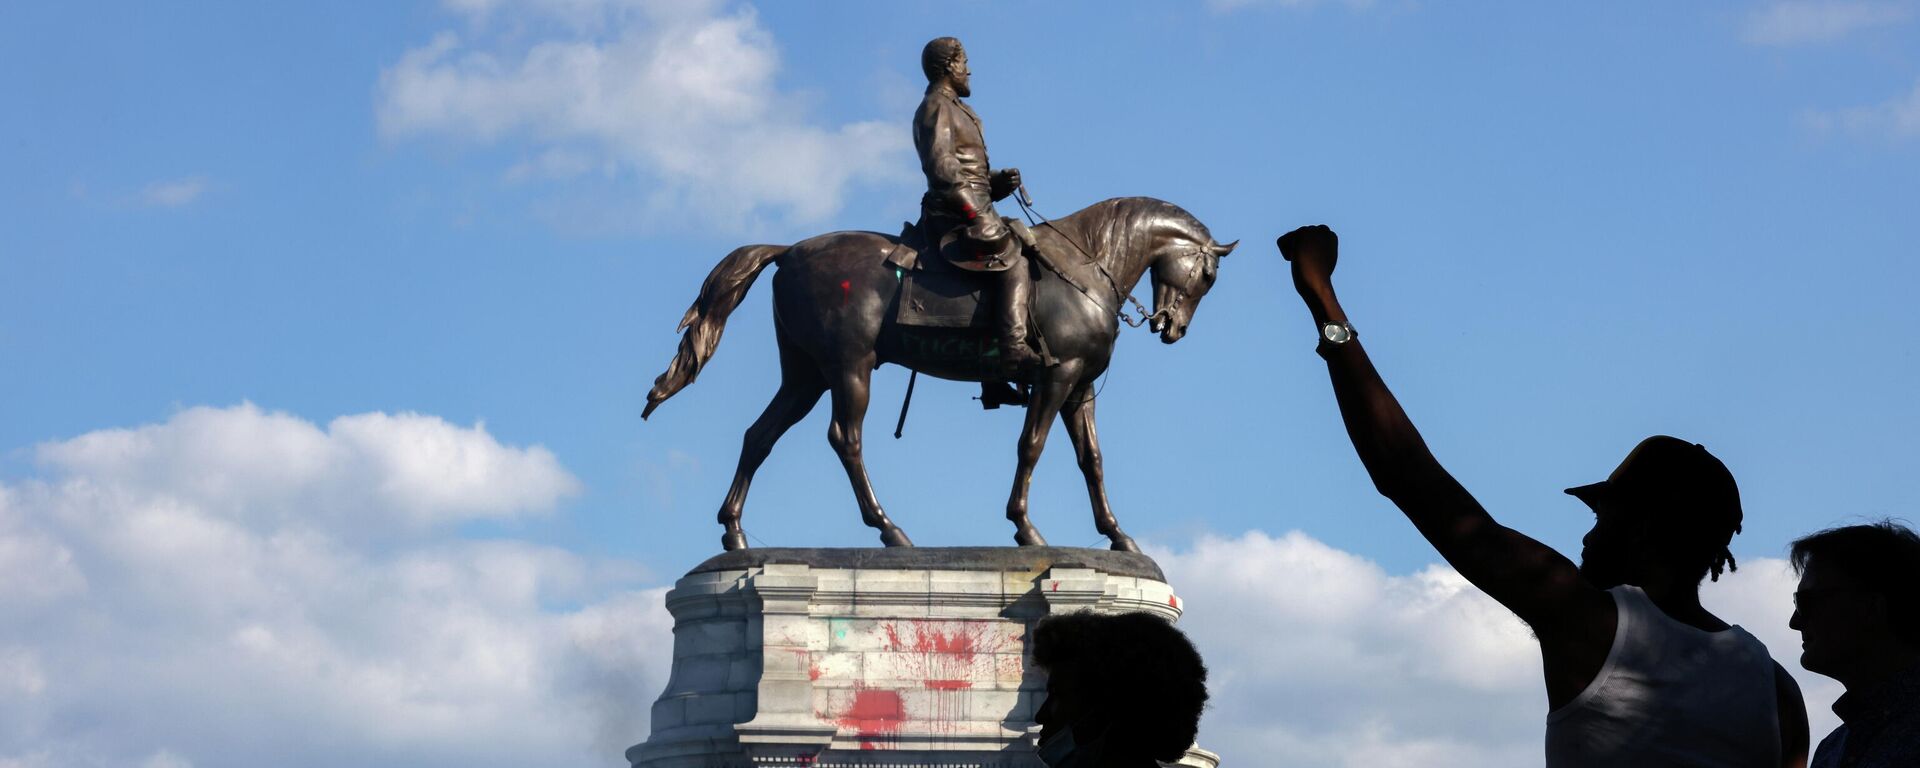 La estatua del general confederado Robert E. Lee en Virginia, EEUU - Sputnik Mundo, 1920, 08.09.2021